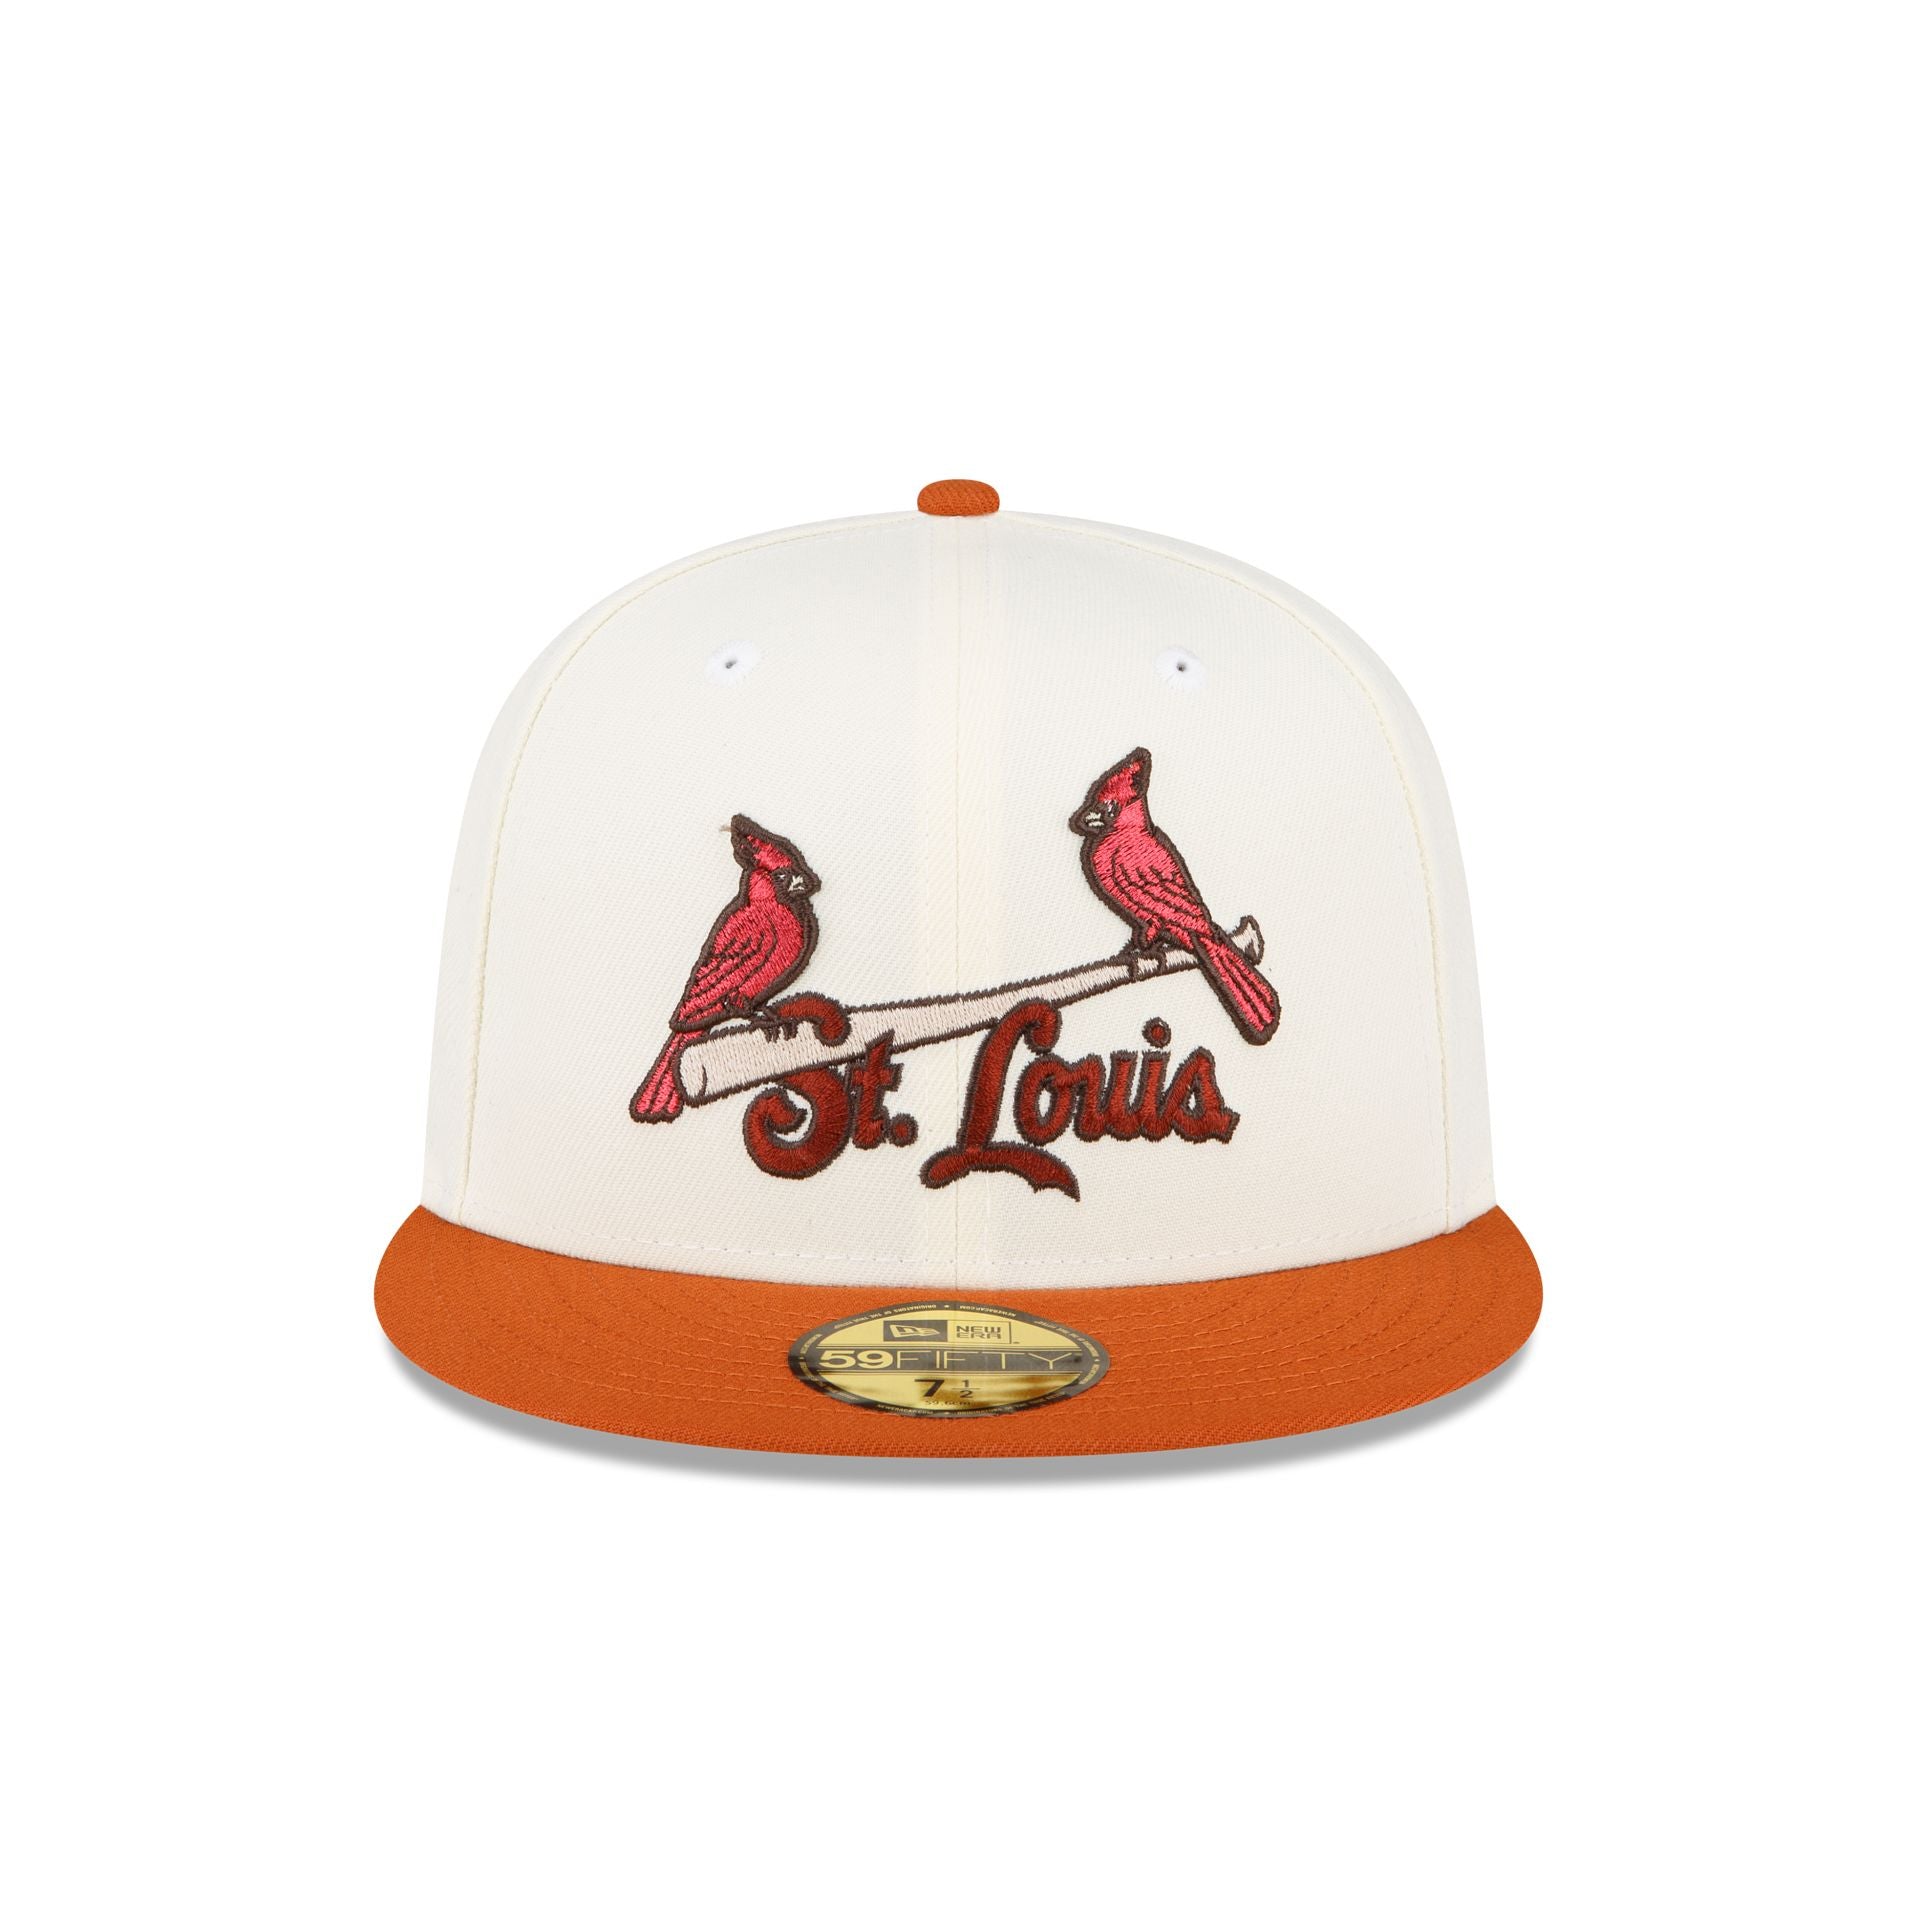 New Era St. Louis City SC Red Property 9TWENTY Snapback Hat